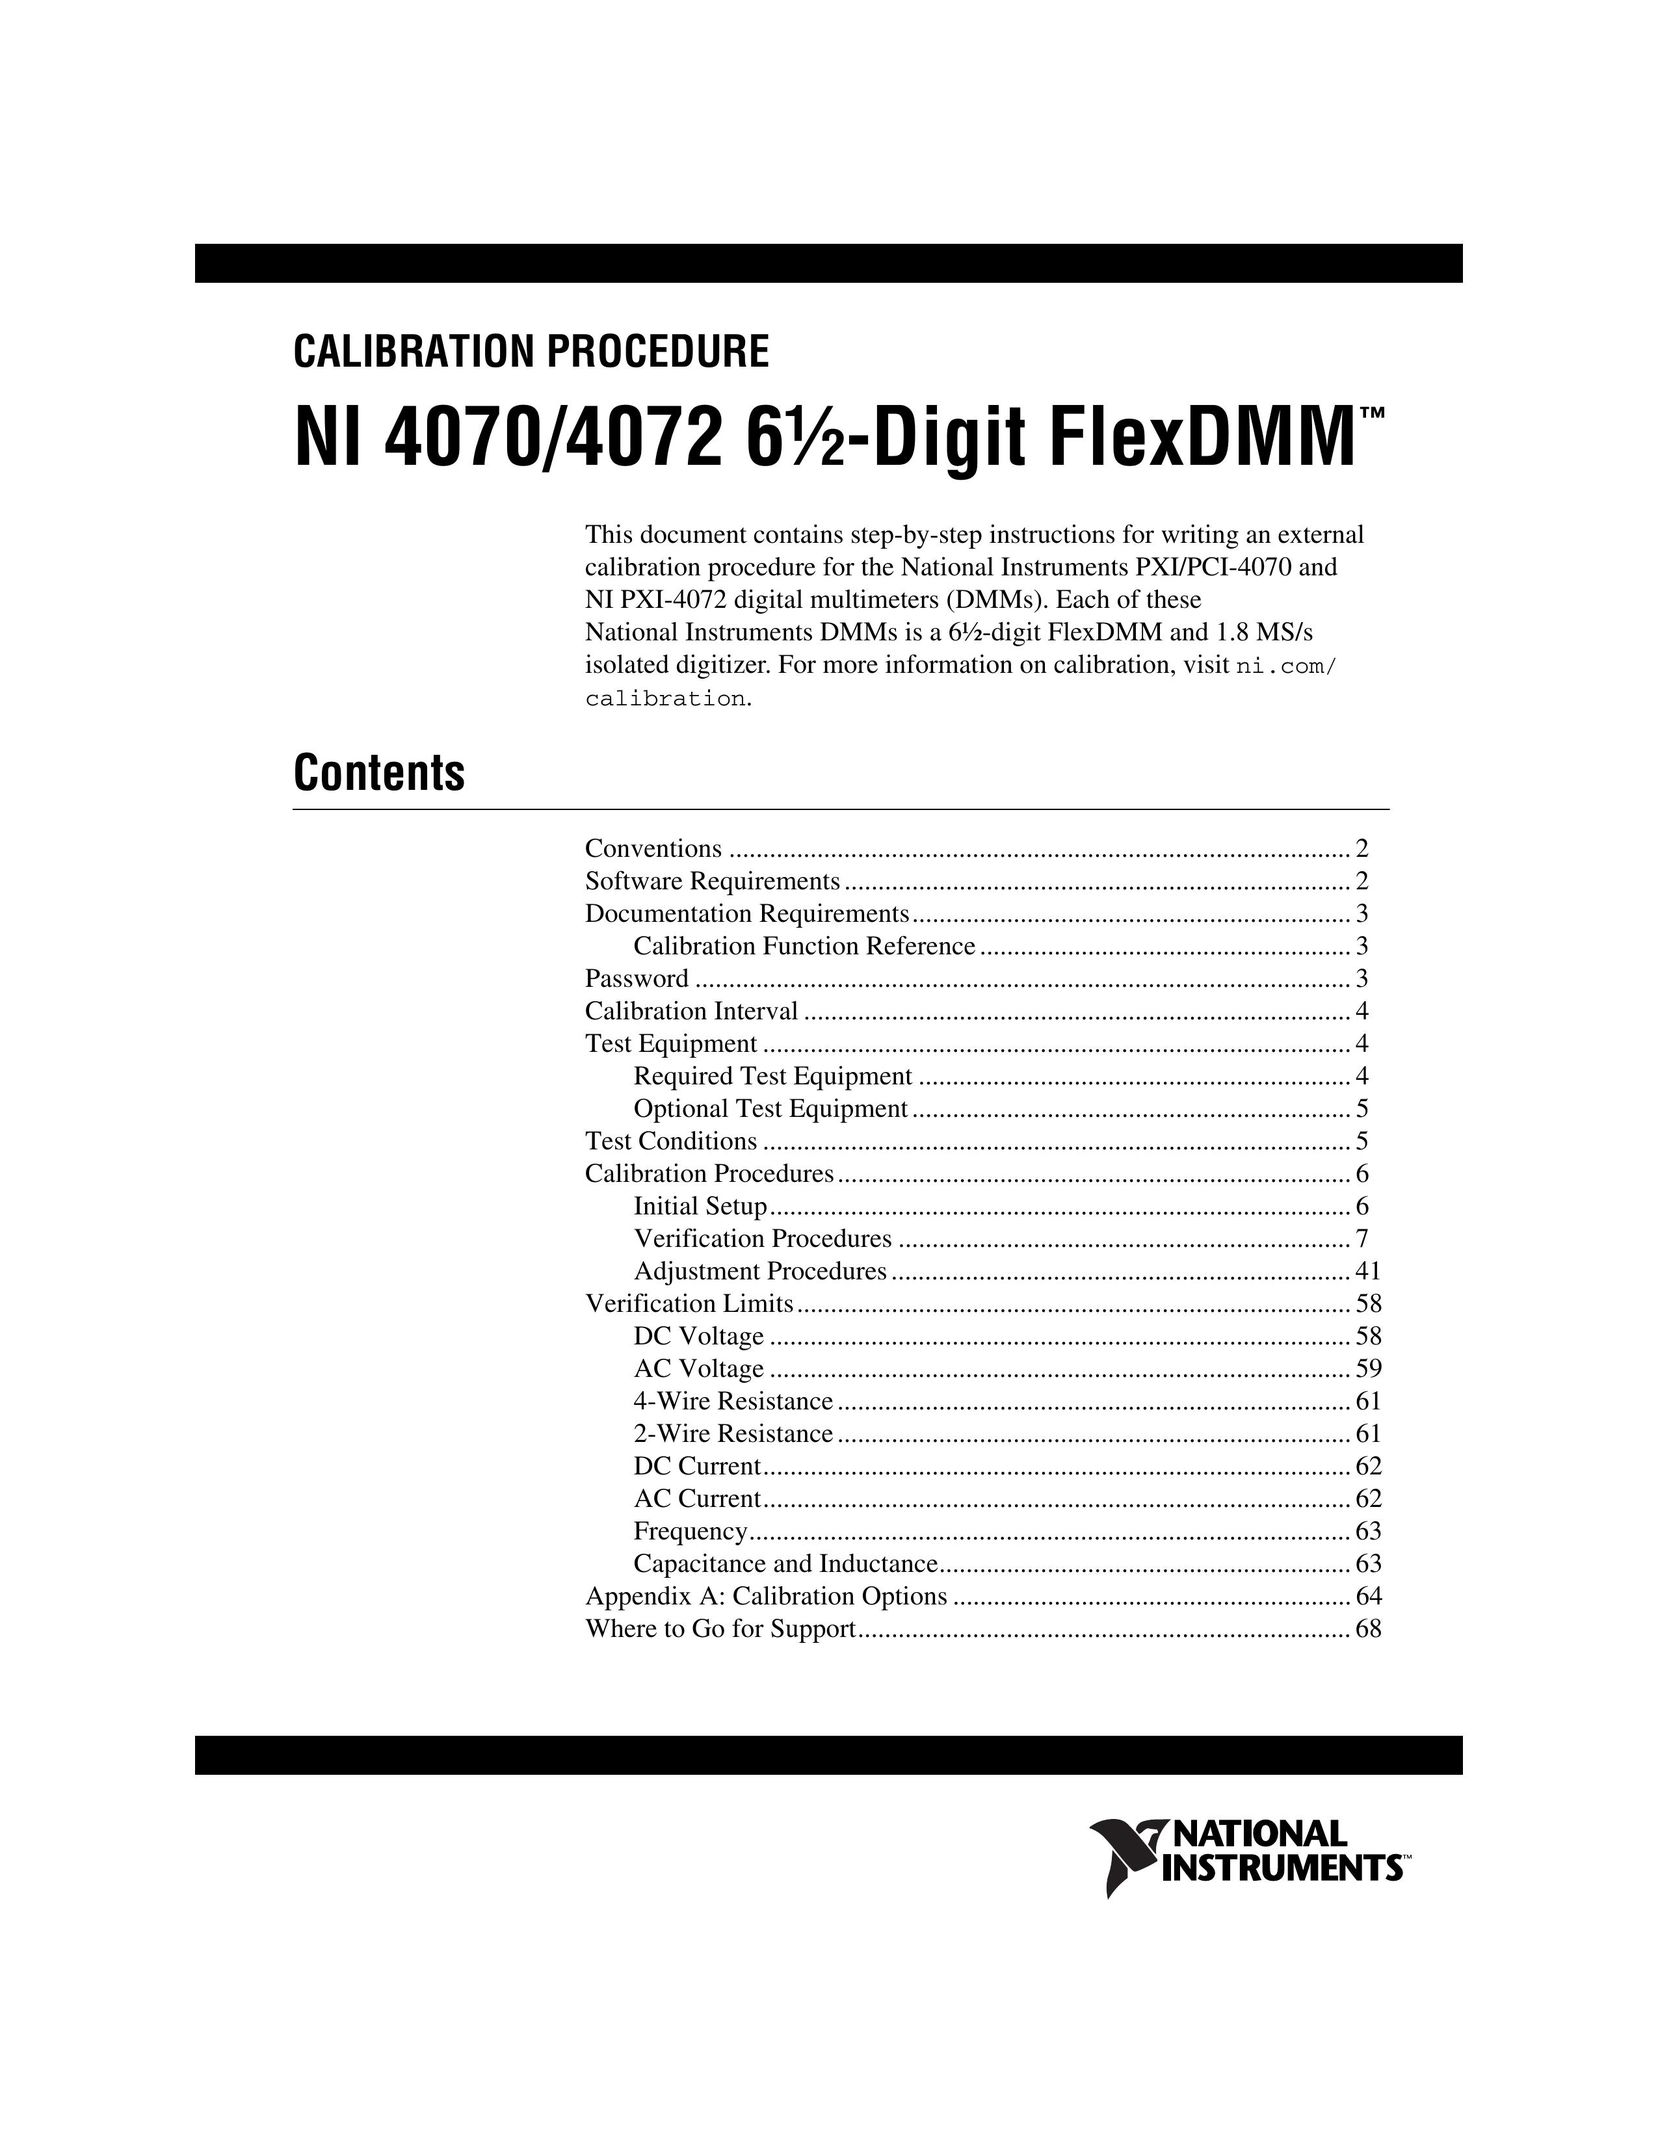 National Instruments NI 4070/4072 6 1/2-Digit FlexDMM Graphics Tablet User Manual